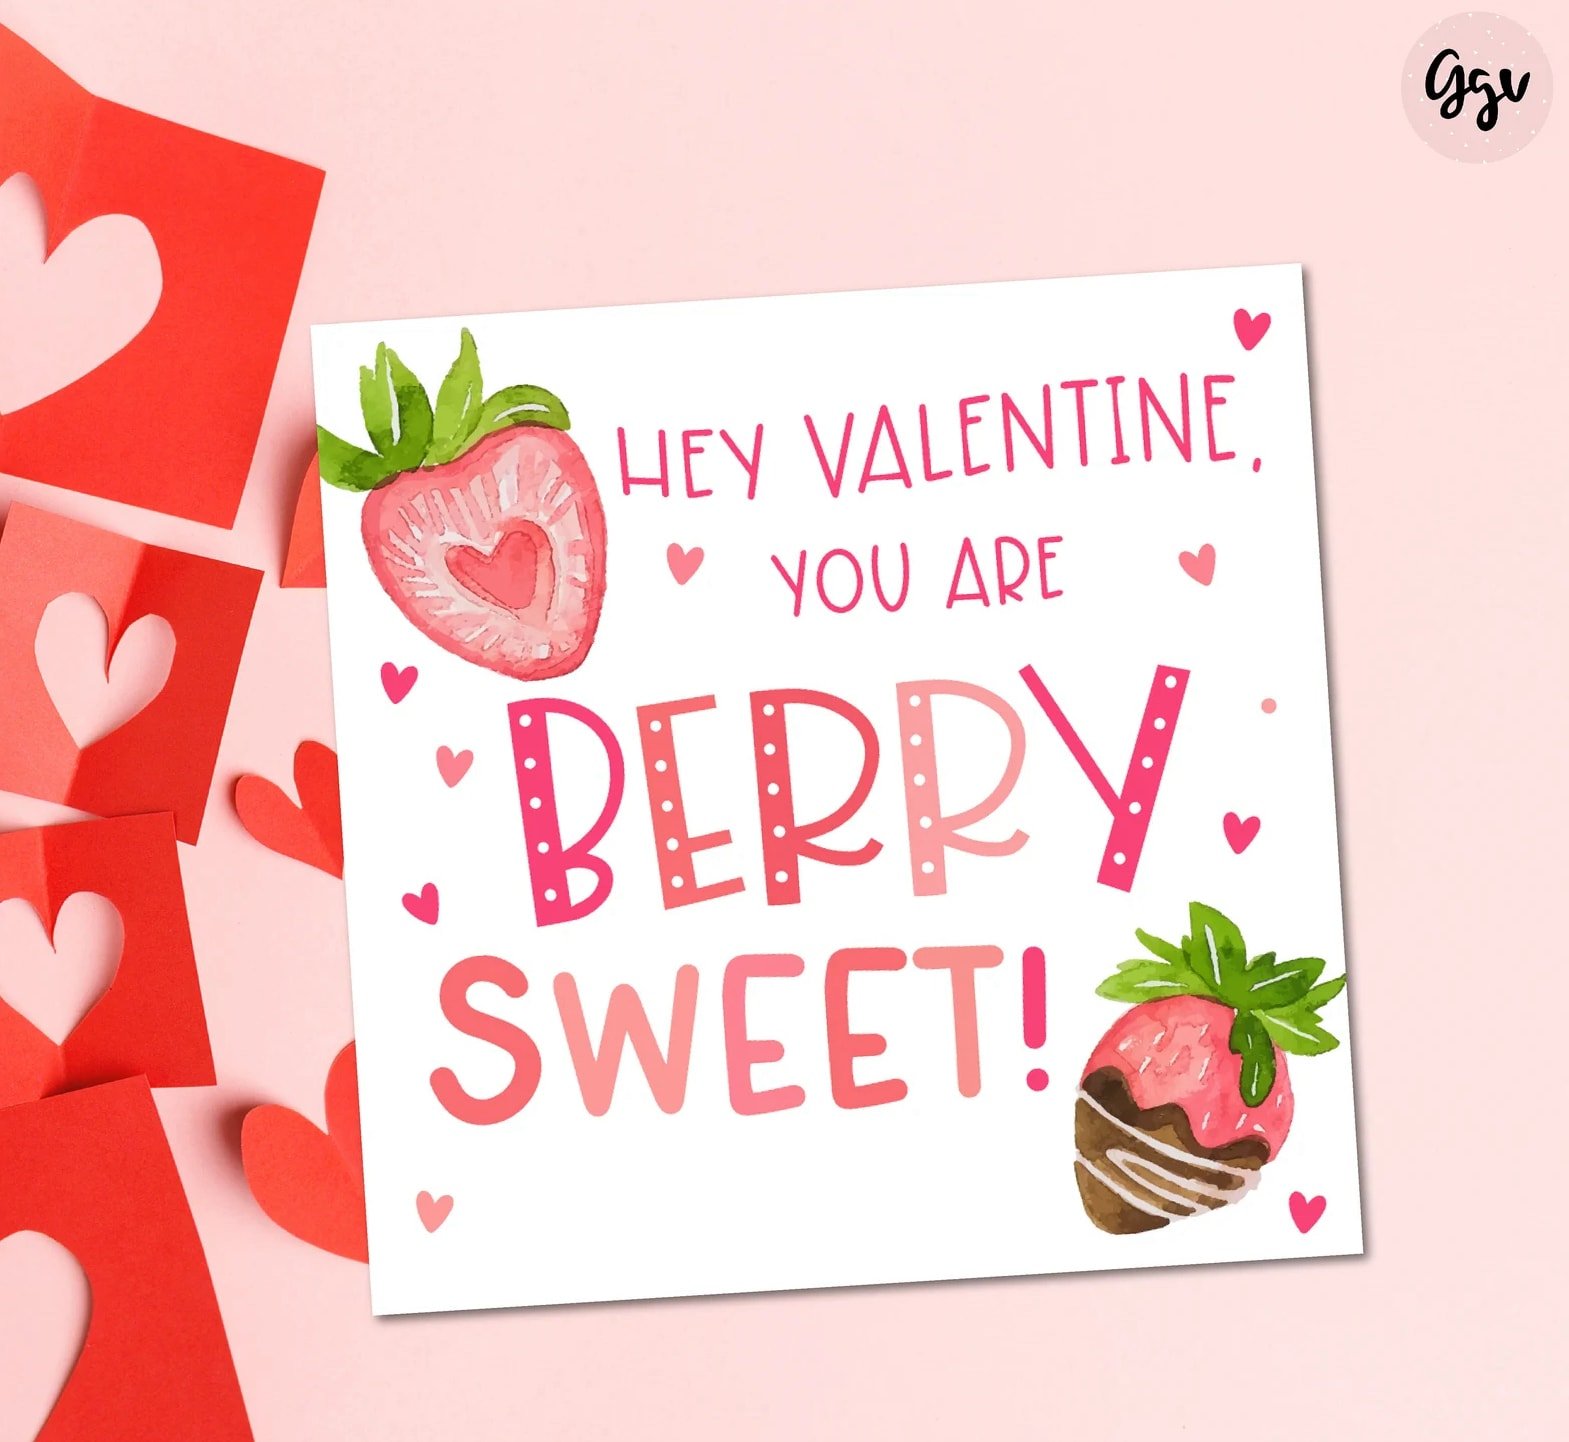 Berry sweet Valentine card 